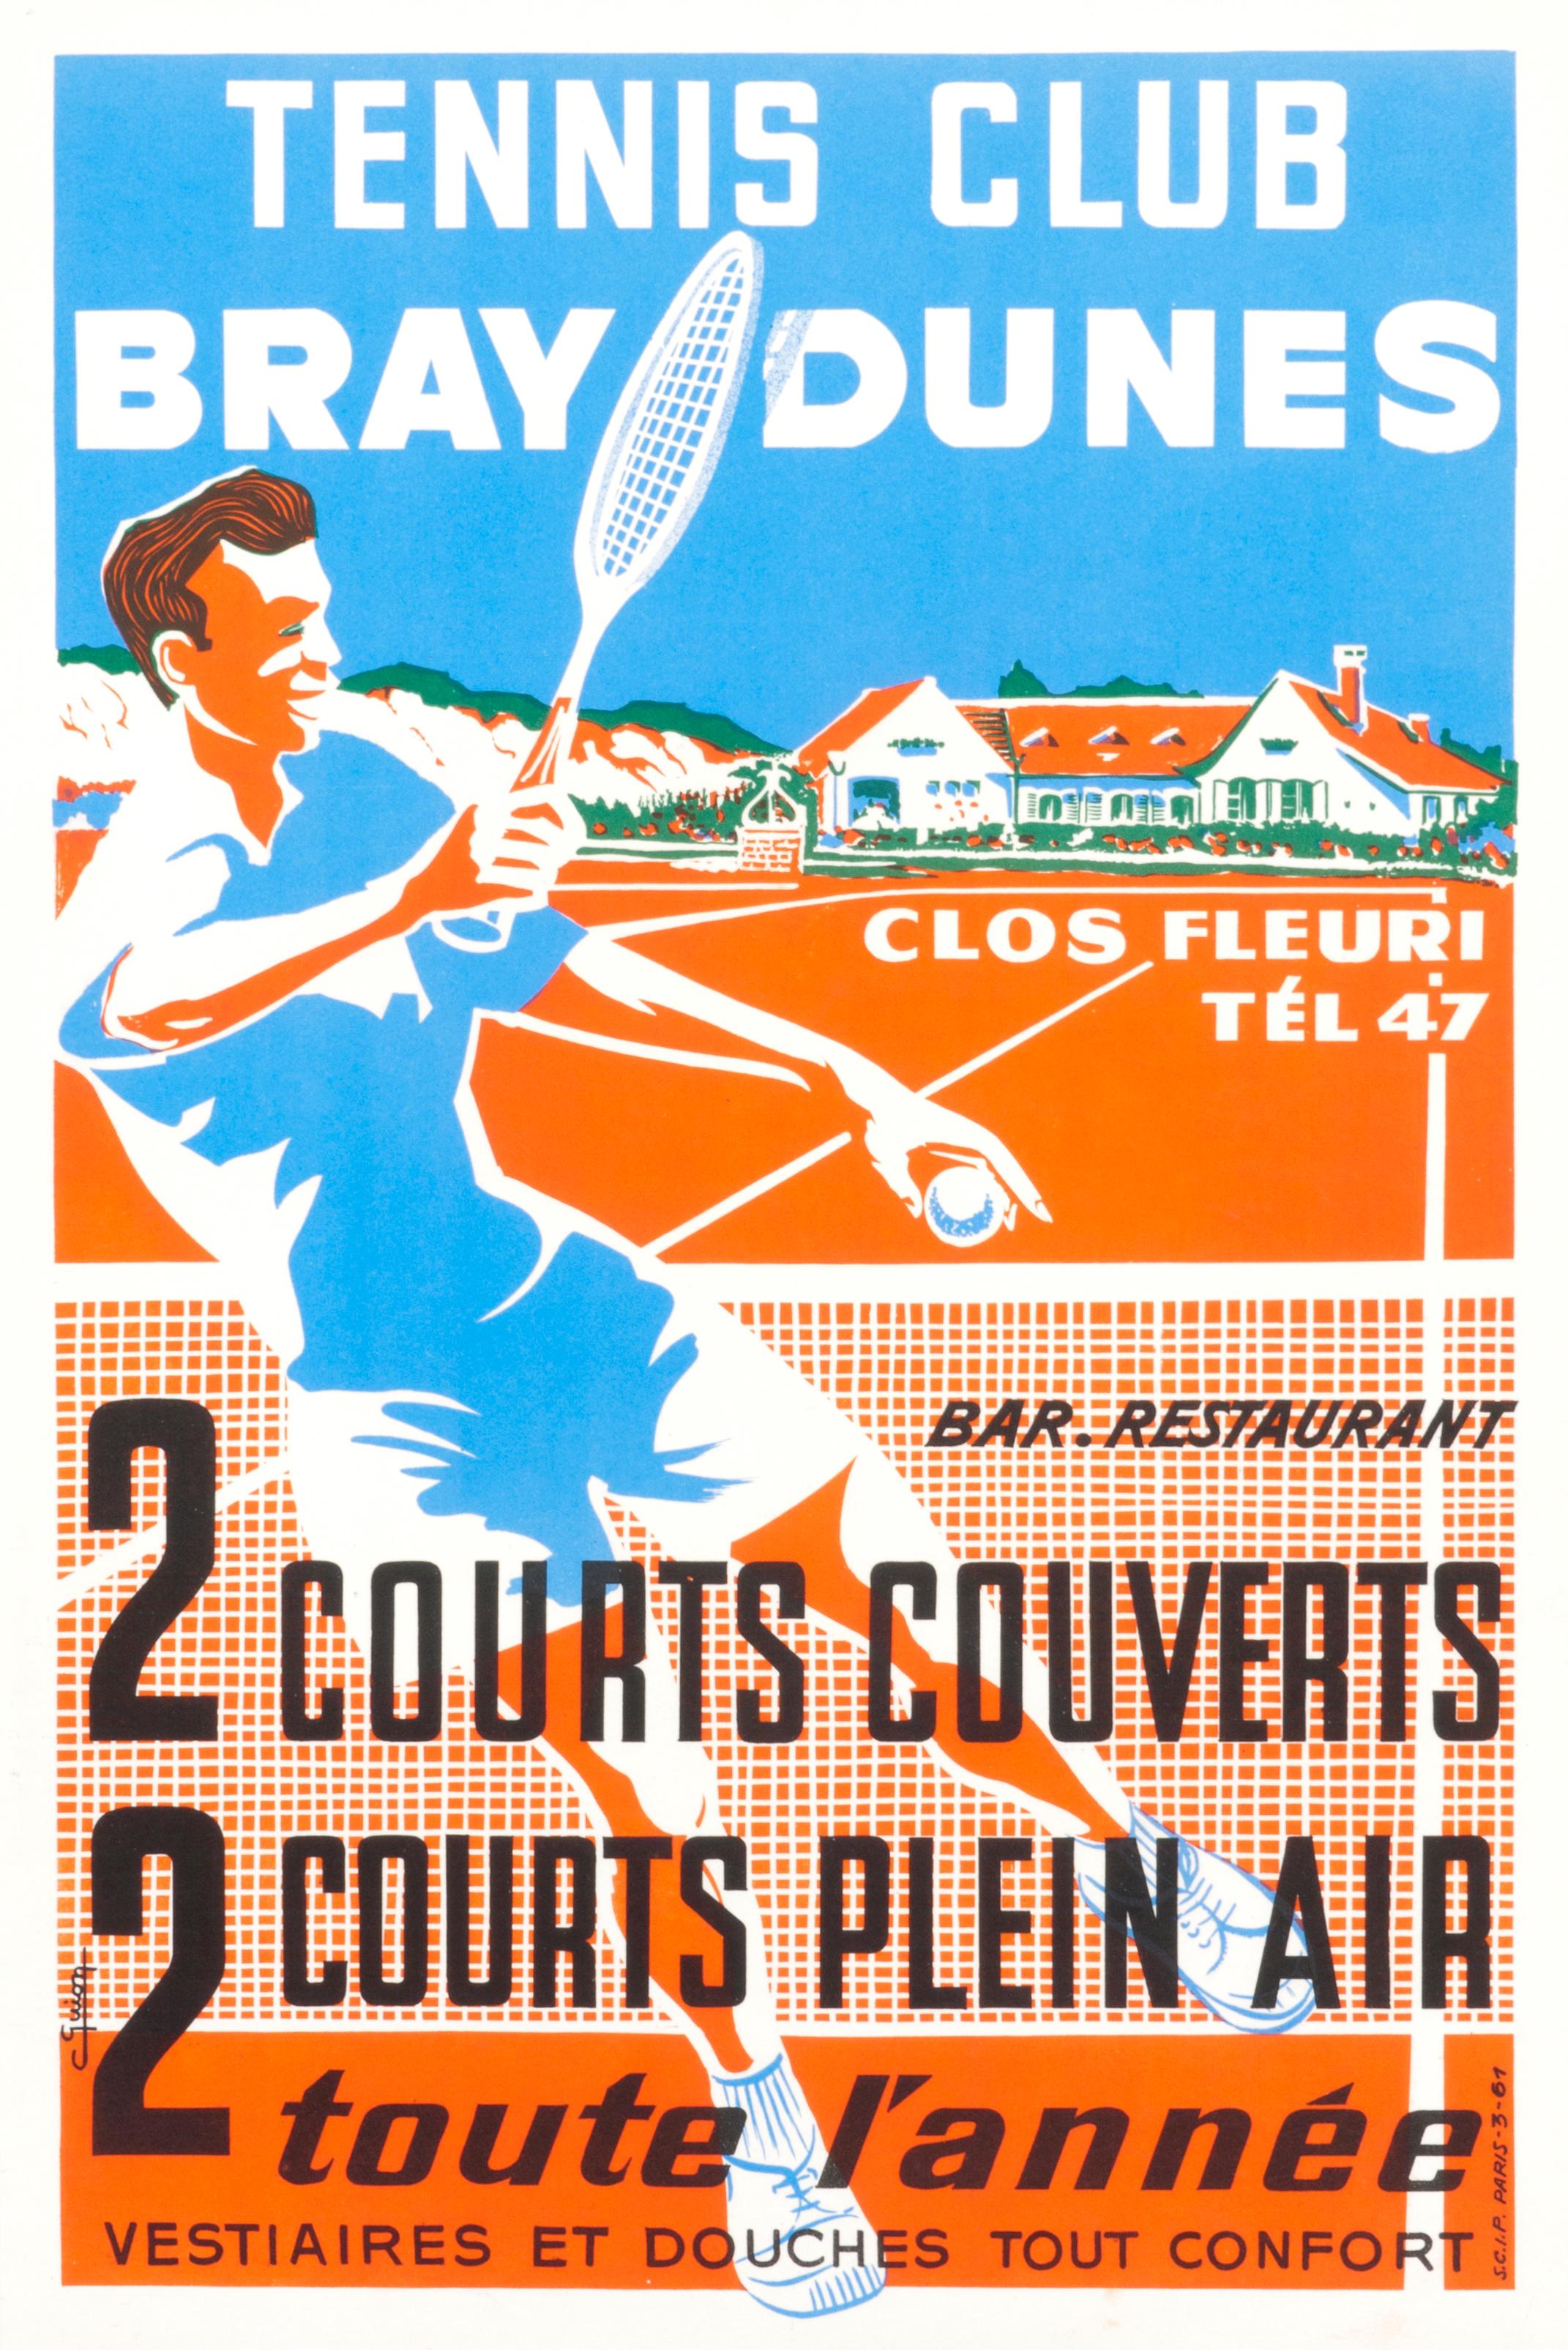 "Tennis Club Bray Dunes" Original Vintage Summer Sports Poster - Print by C. Guion